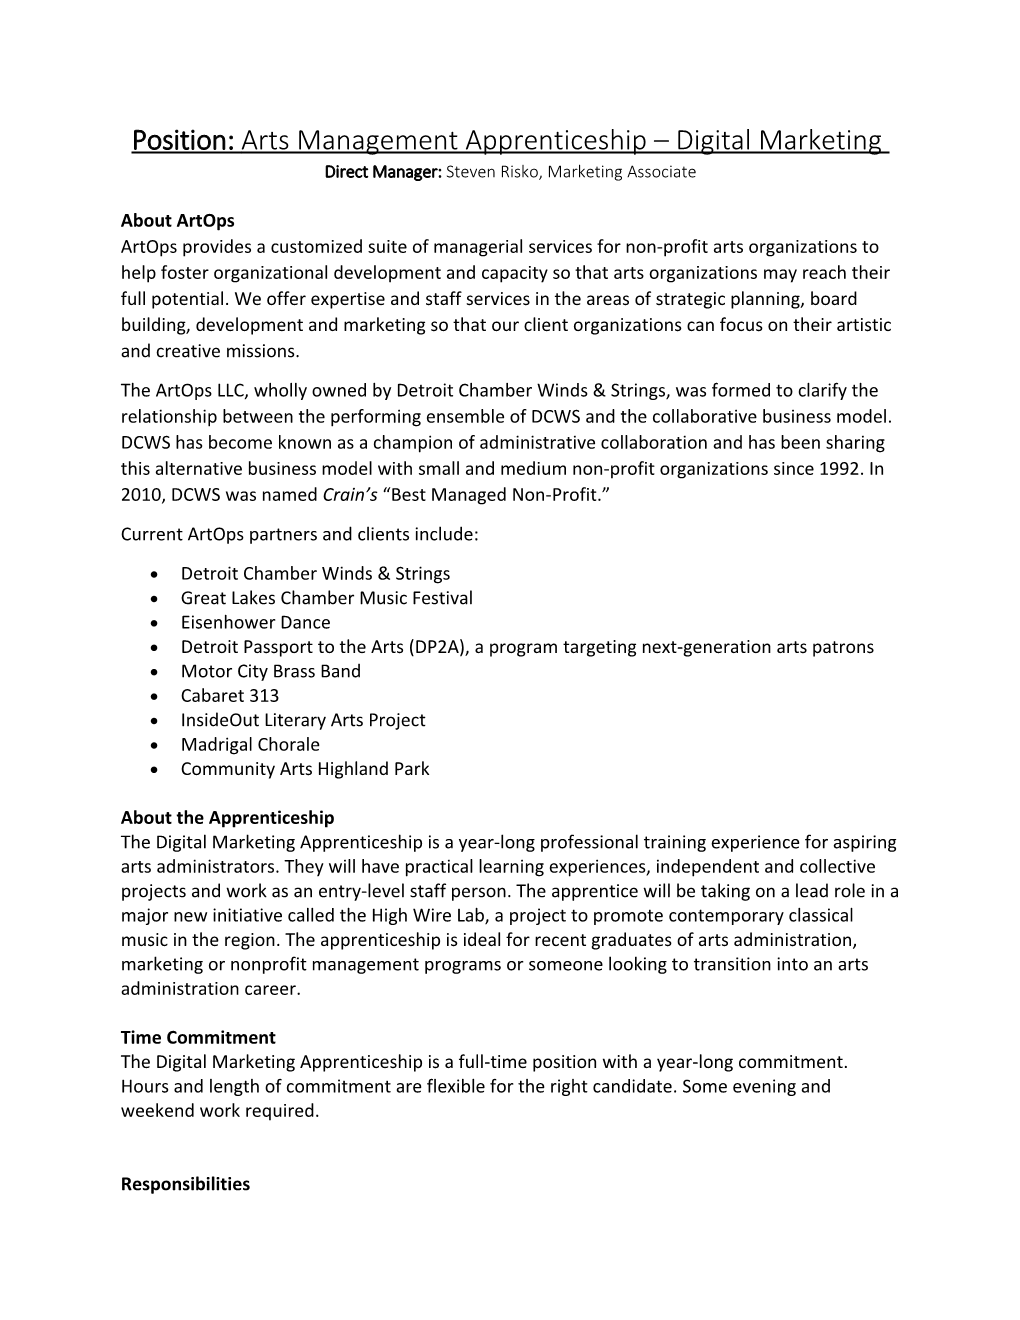 Position: Arts Management Apprenticeship Digital Marketing